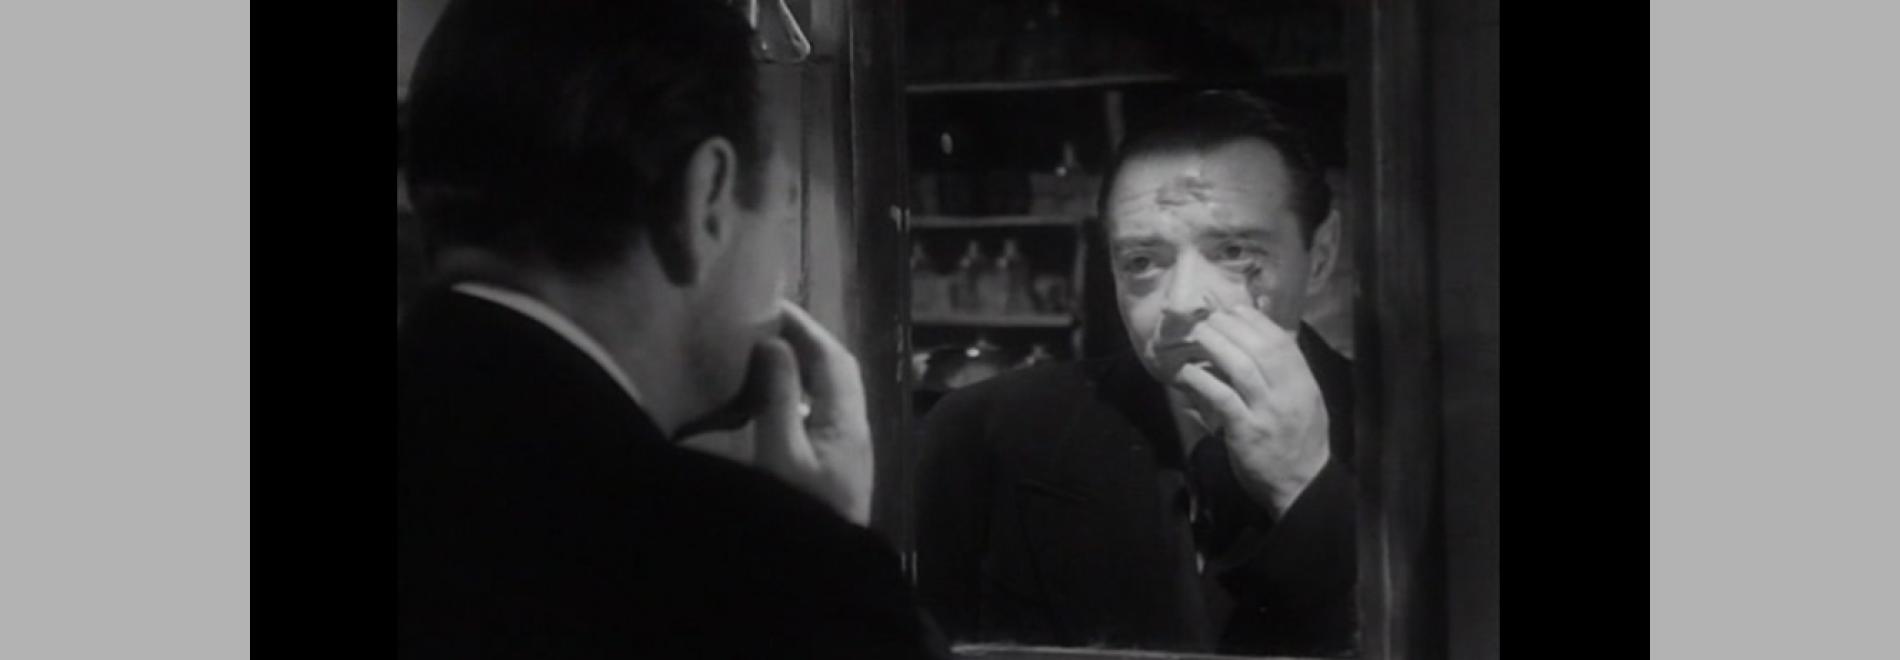 Peter Lorre - Das doppelte Gesicht / La doble cara de Peter Lorre (Harun Farocki, Felix Hoffmann, 1984)